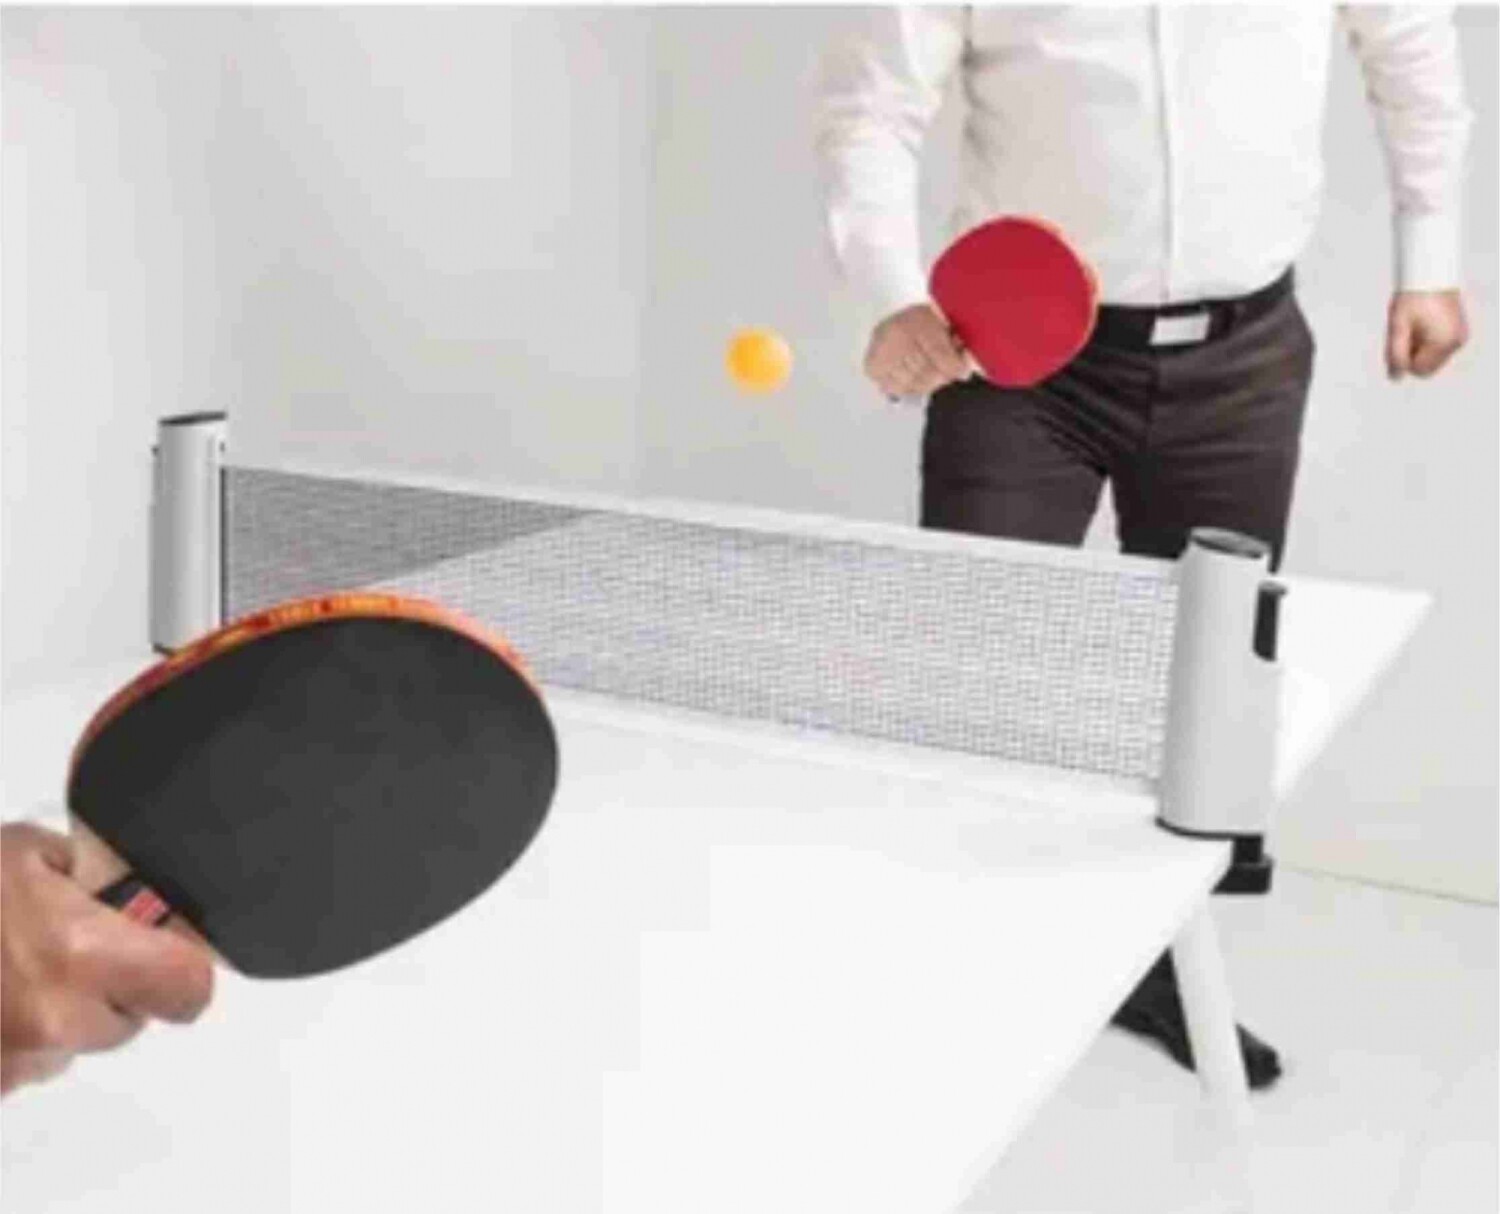 Red para mesa de ping pong - polietileno - 180 cm de longitud